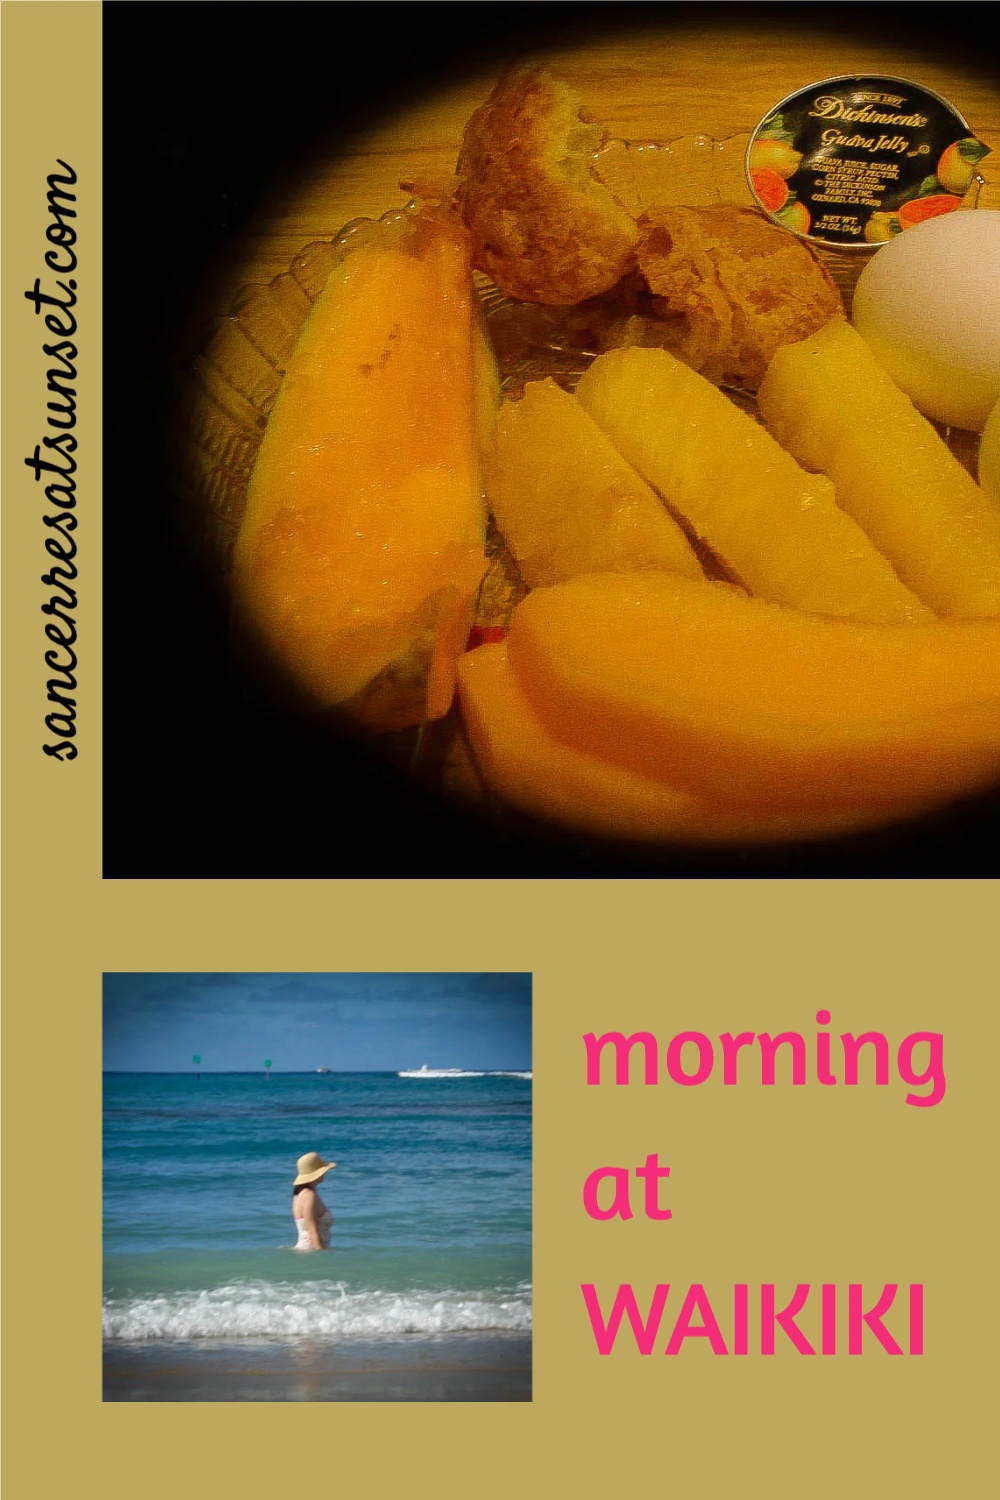 Waikiki in the Morning